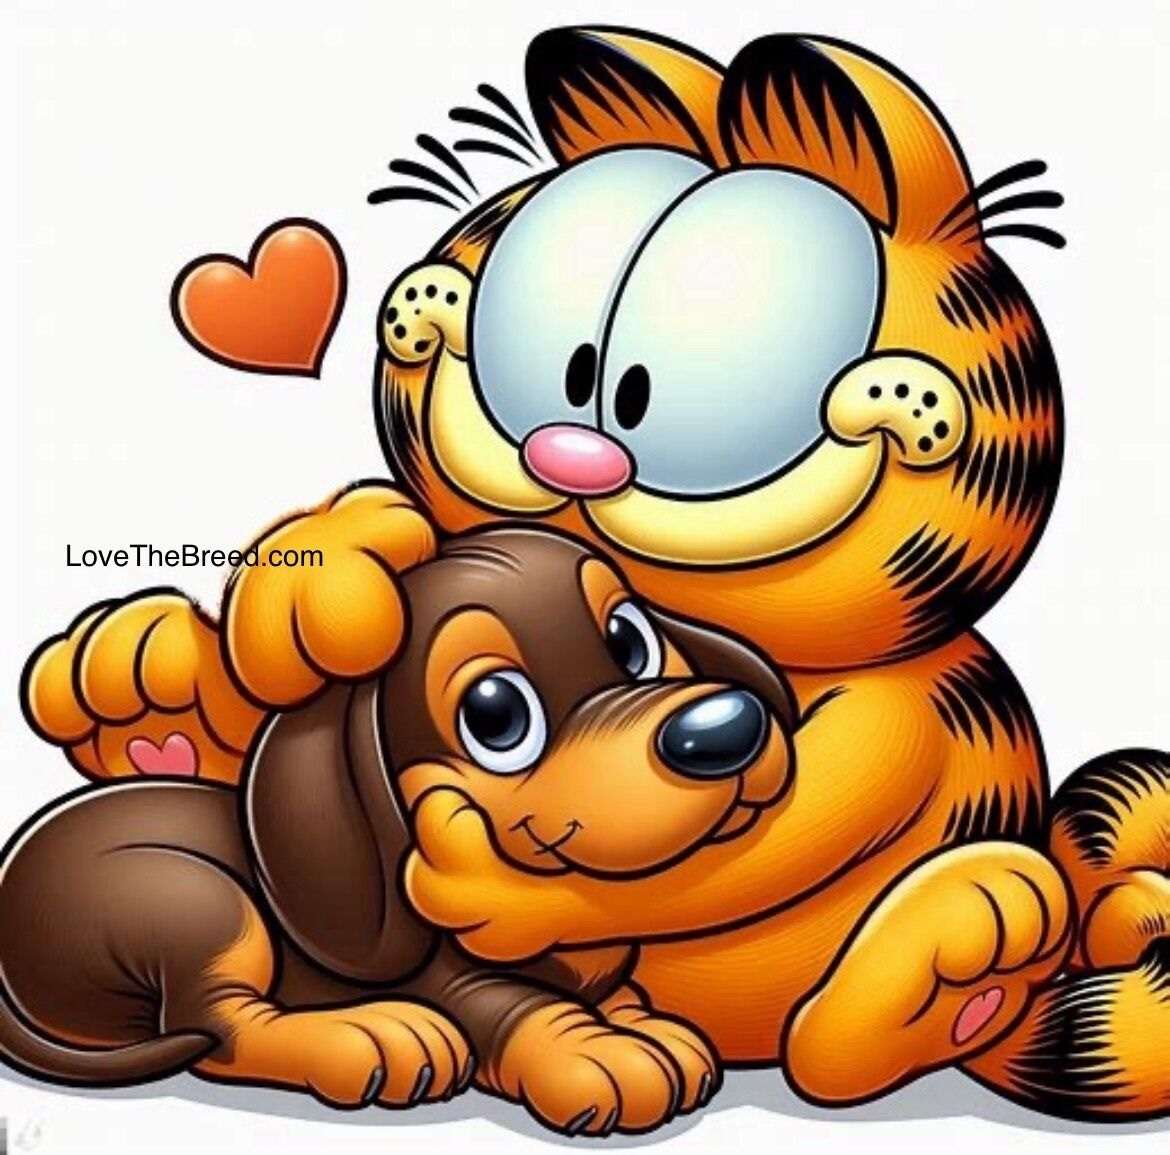 Garfield iubește dachshunii jigsaw puzzle online